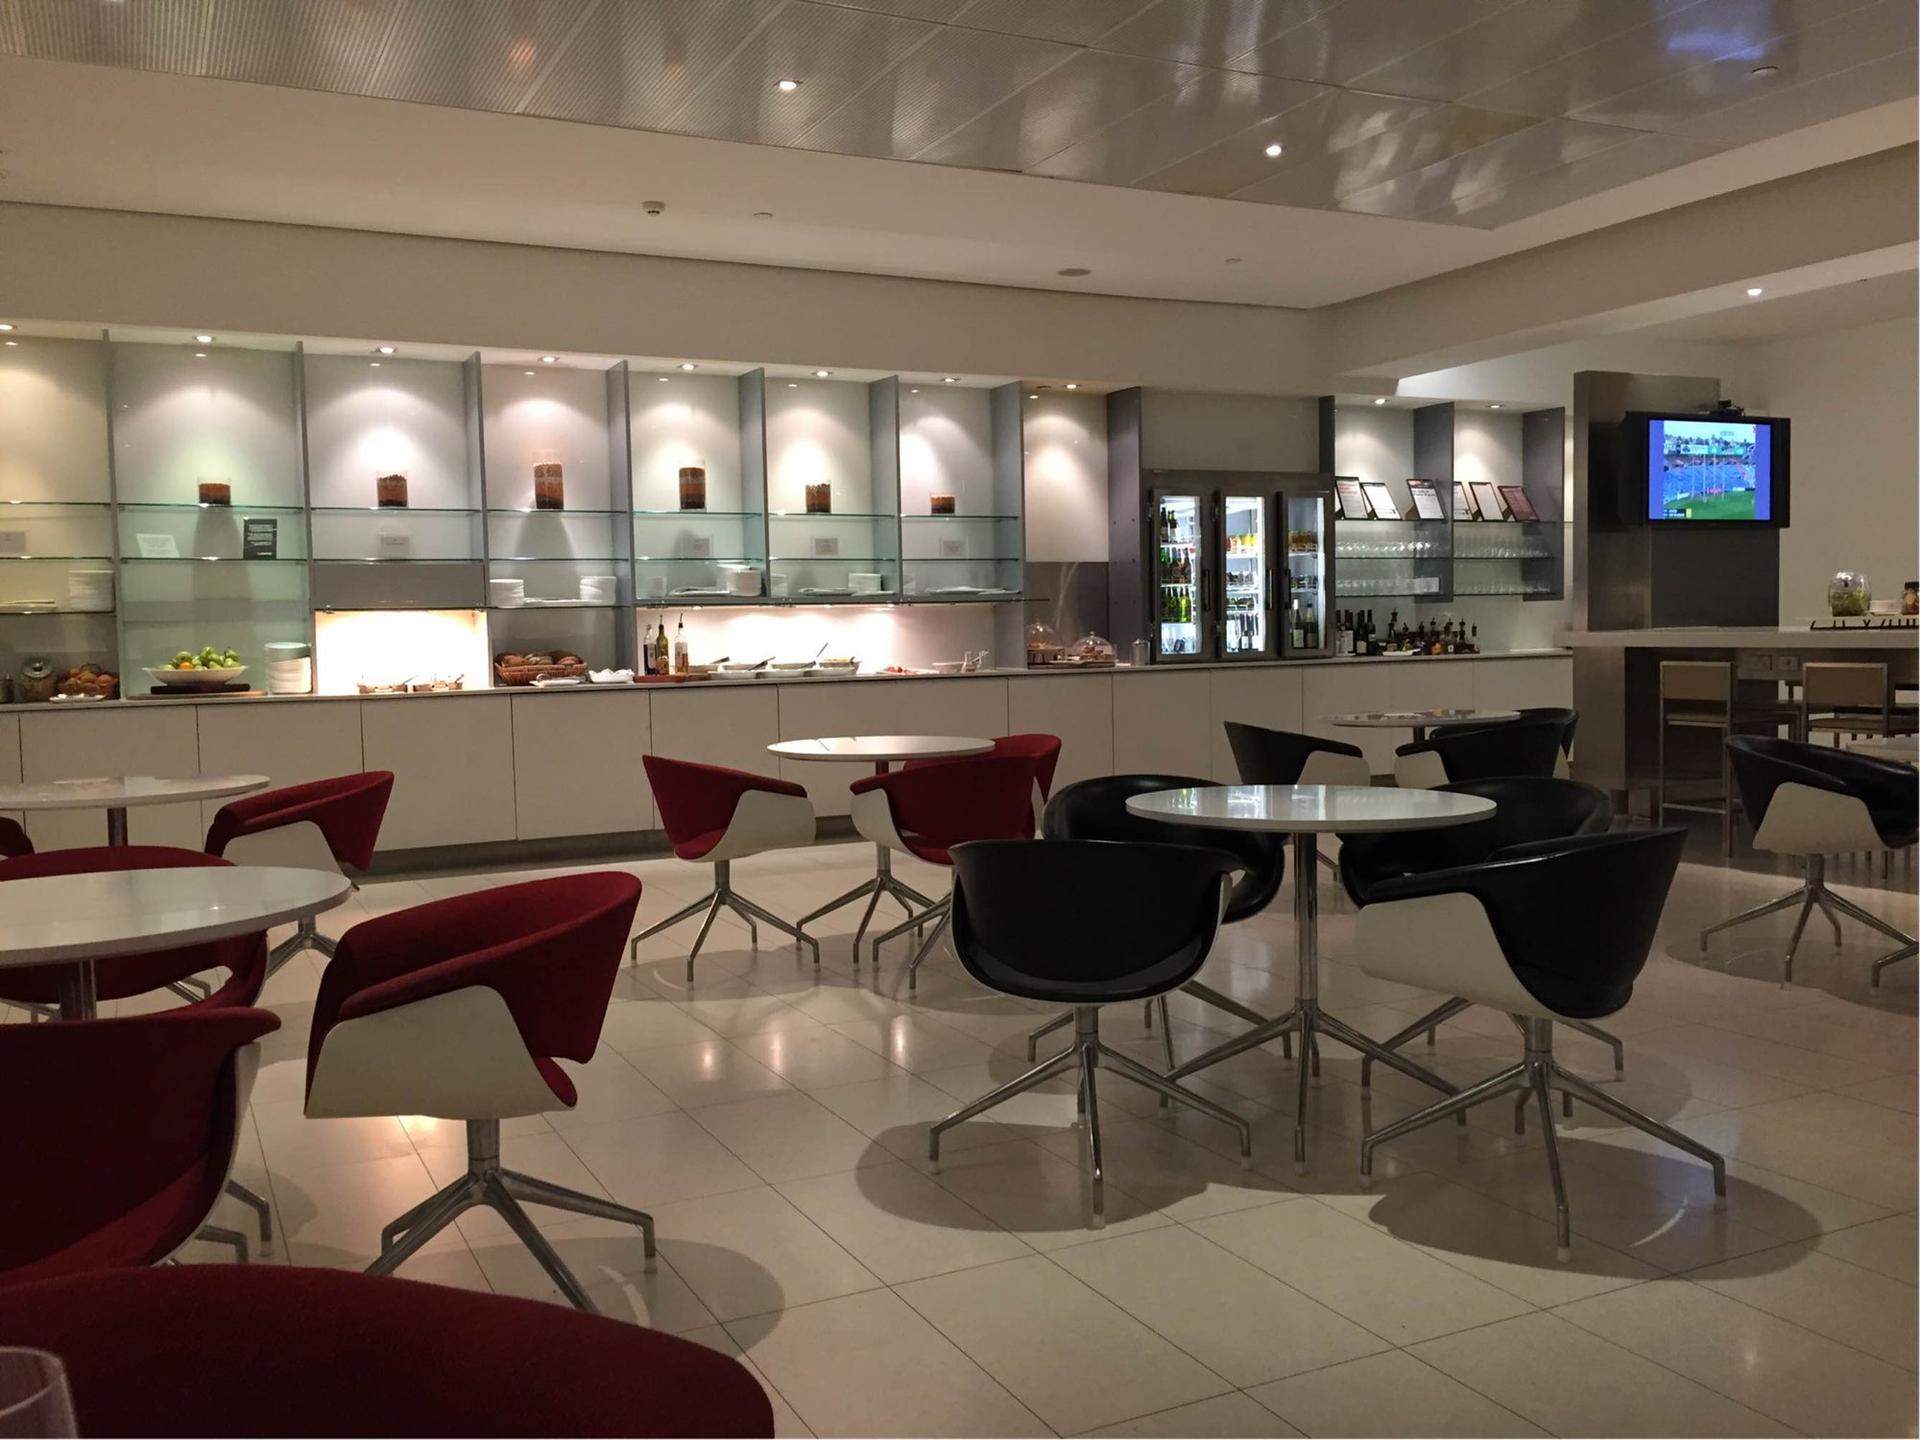 Qantas Airways International Business Lounge image 4 of 17